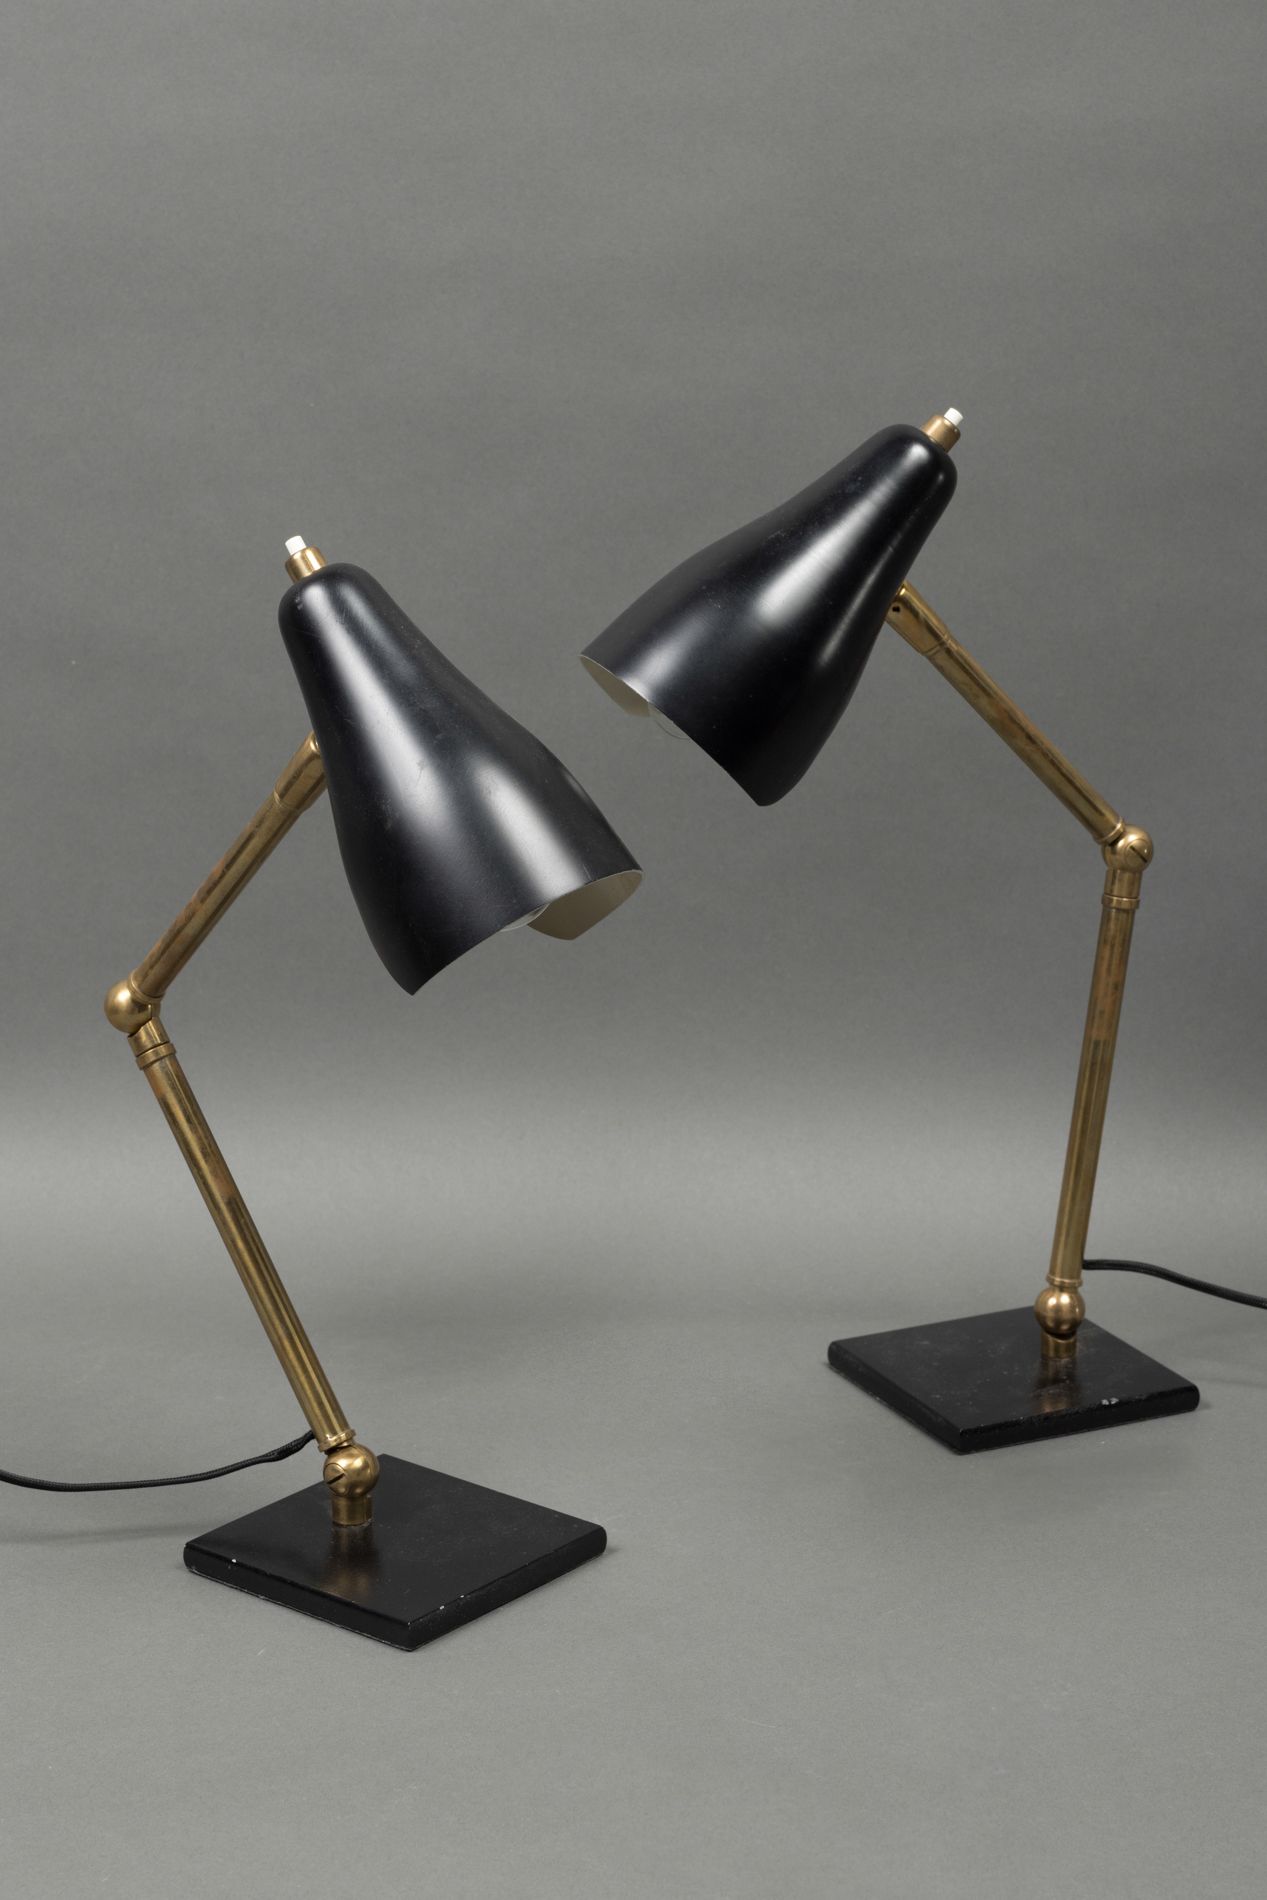 Null 一对铰接式黄铜和黑色漆面金属的台灯。
工作于20世纪50年代。
H.39厘米 

法律费用 14.28